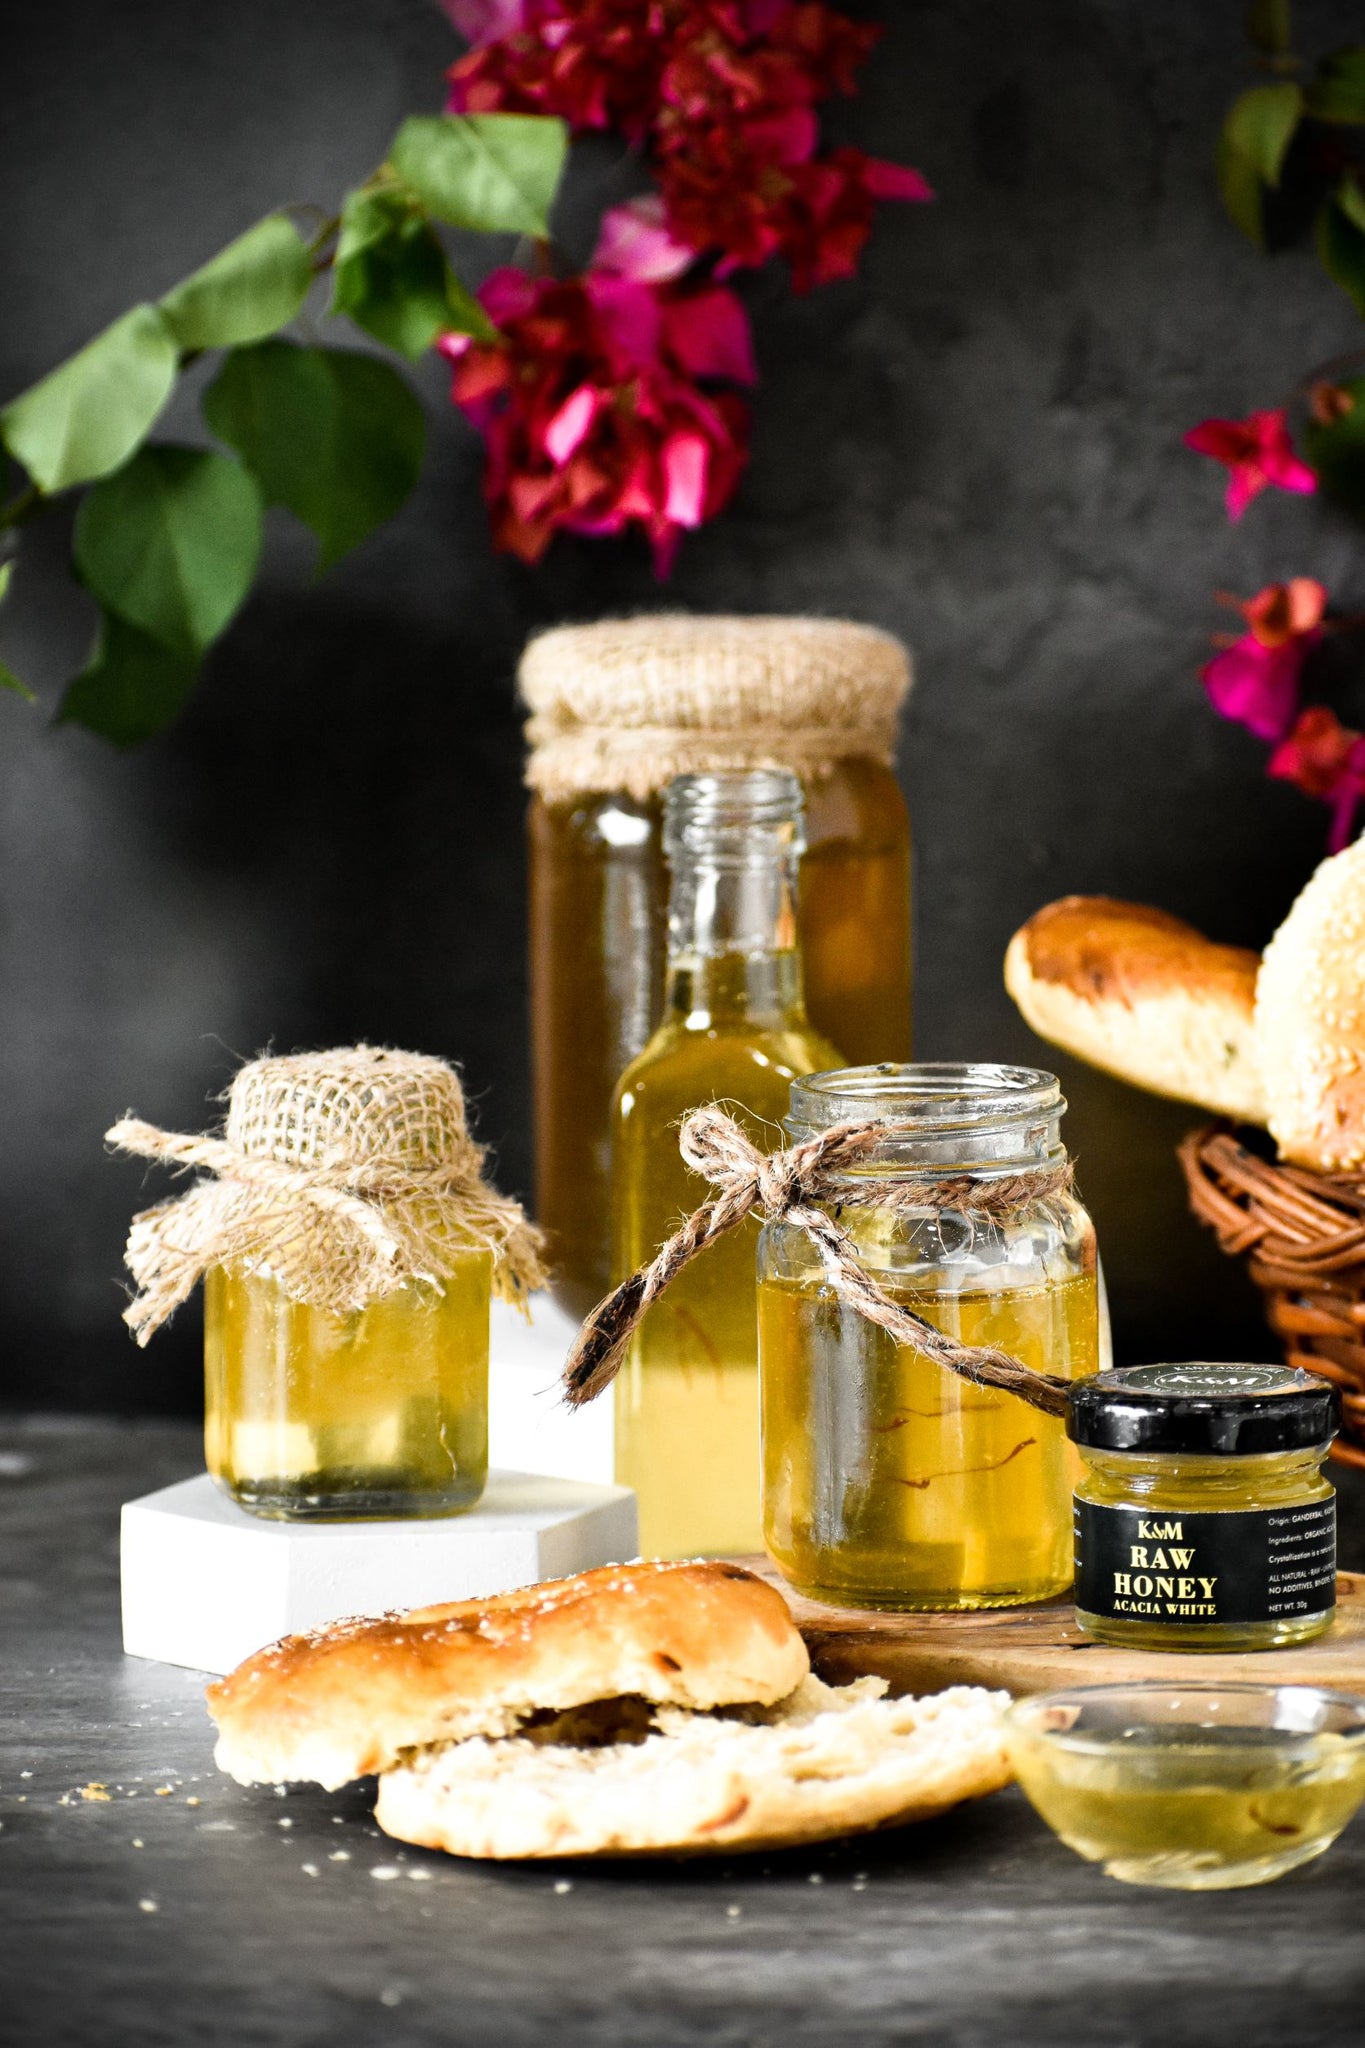 Kashmiri White Honey - Acacia (Saffron Infused)